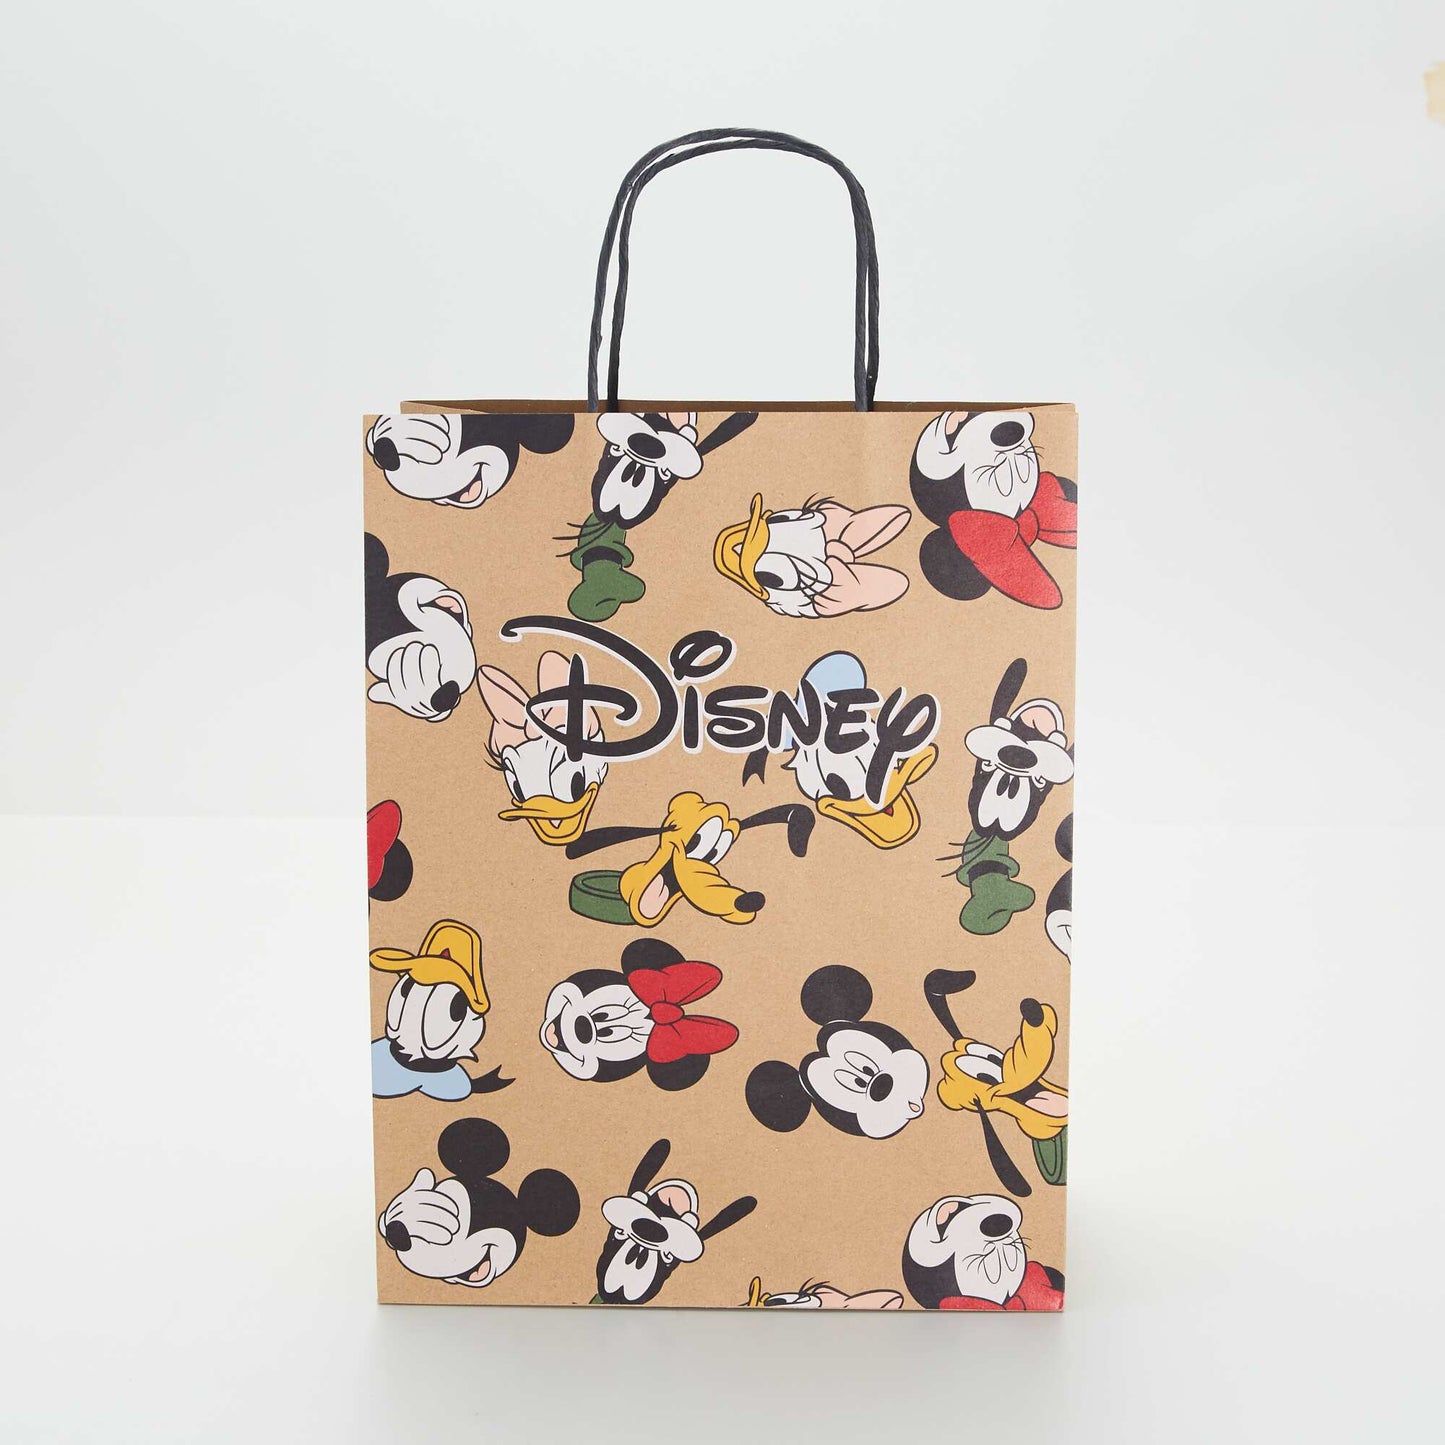 'Disney' gift bag BROWN